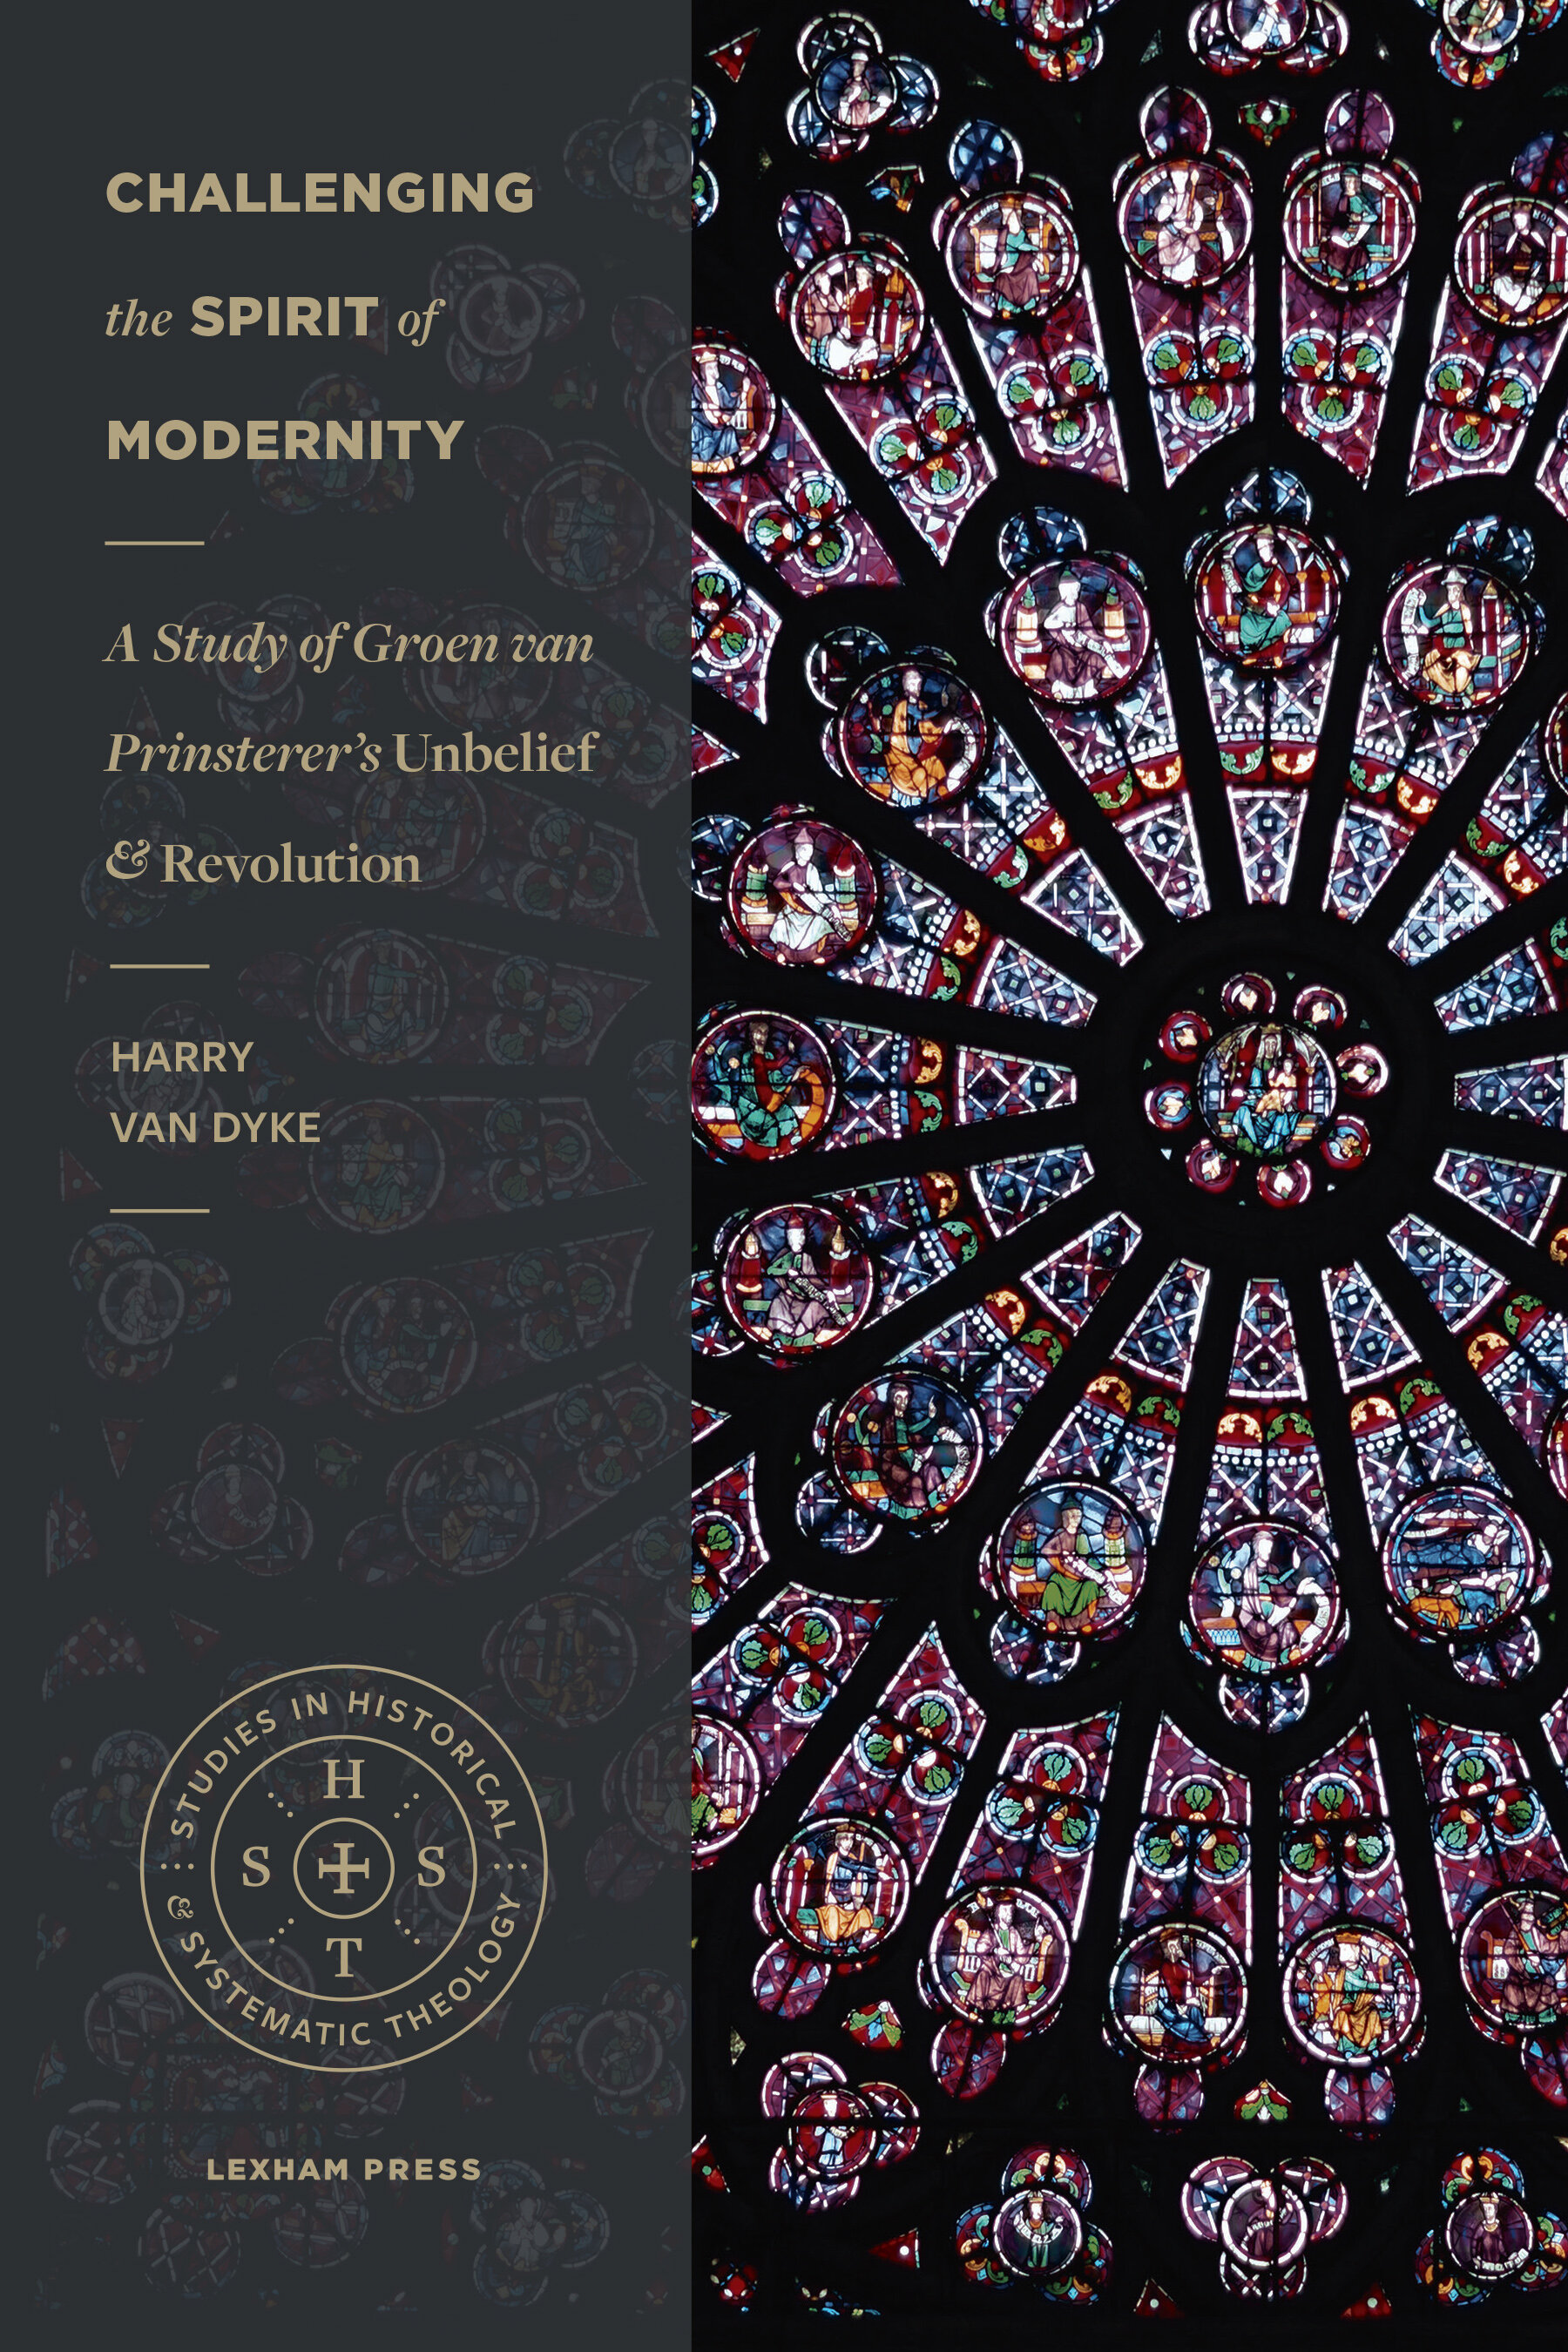 Challenging the Spirit of Modernity: A Study of Groen van Prinsterer’s Unbelief and Revolution